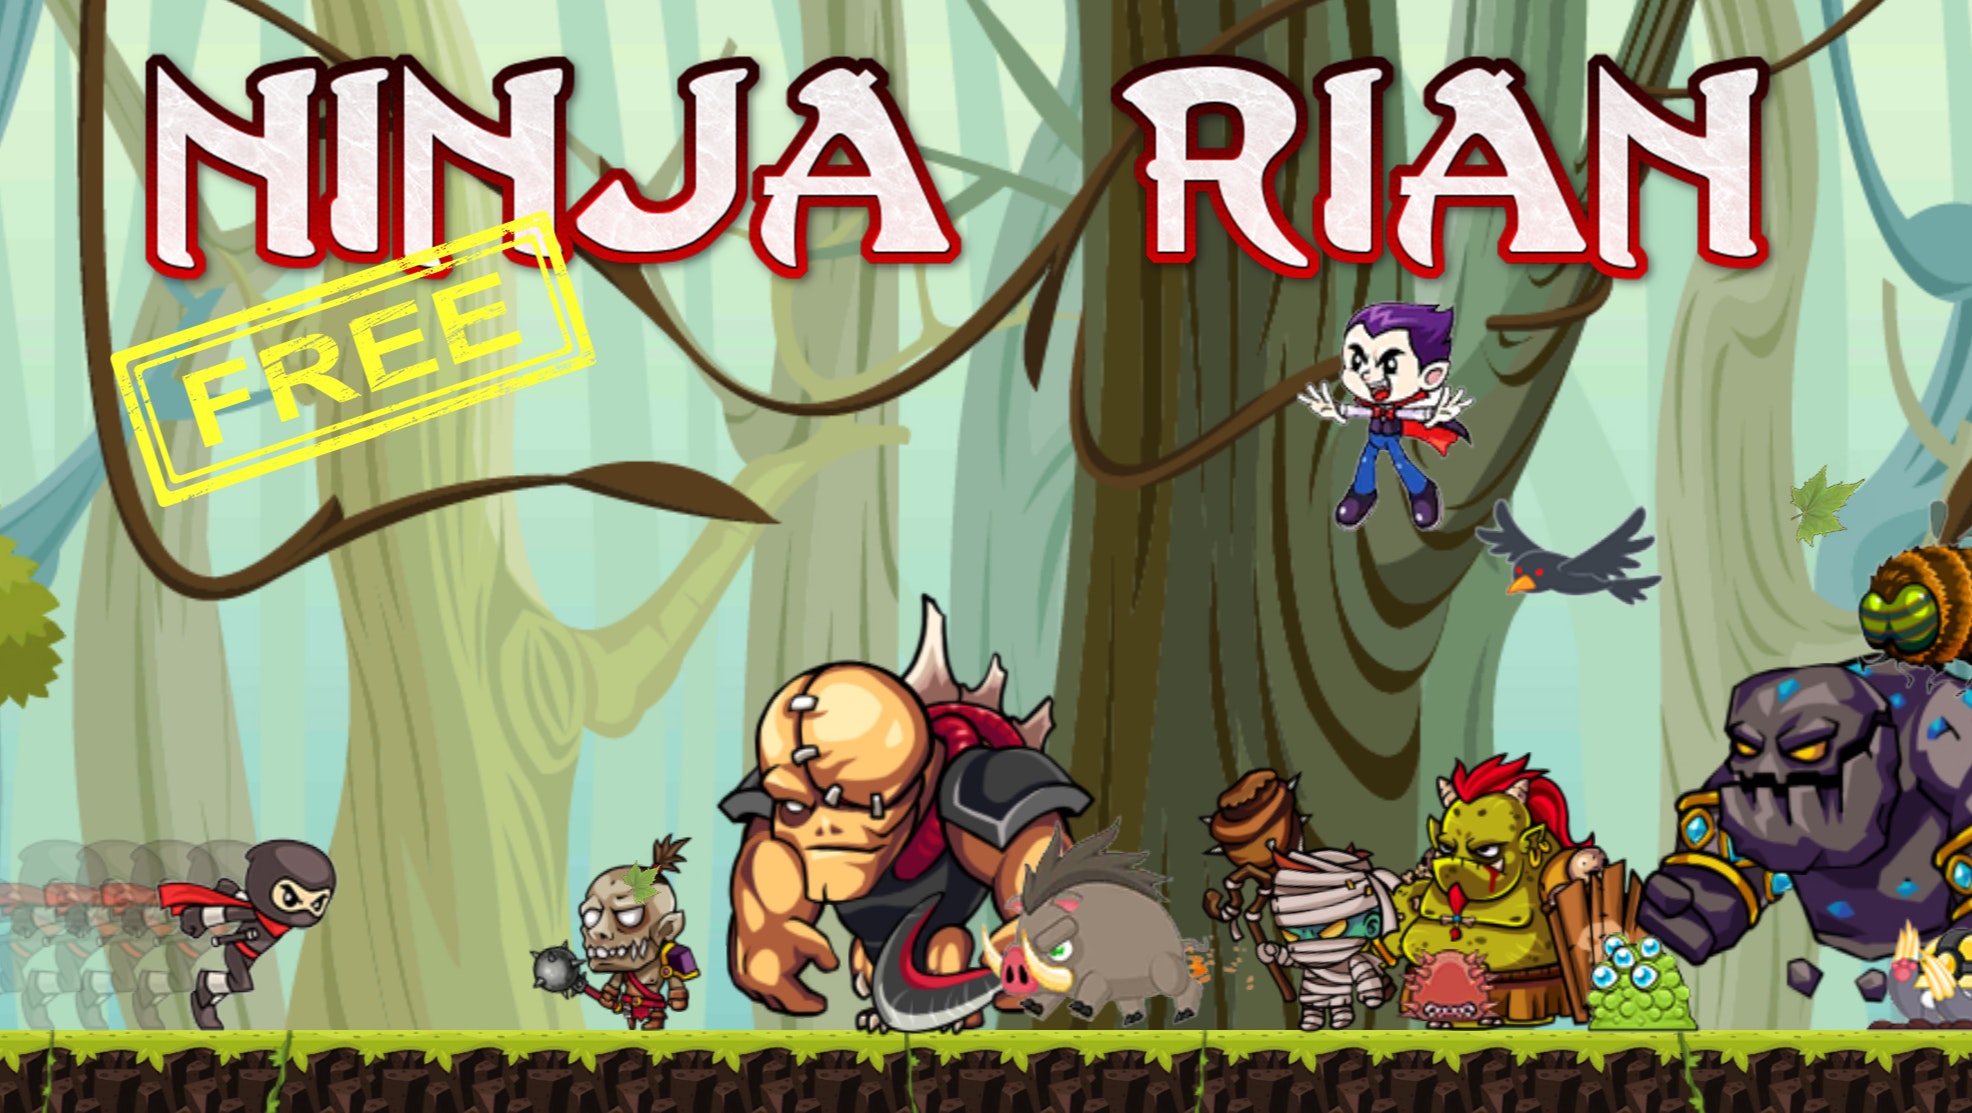 NINJA SHARK free online game on